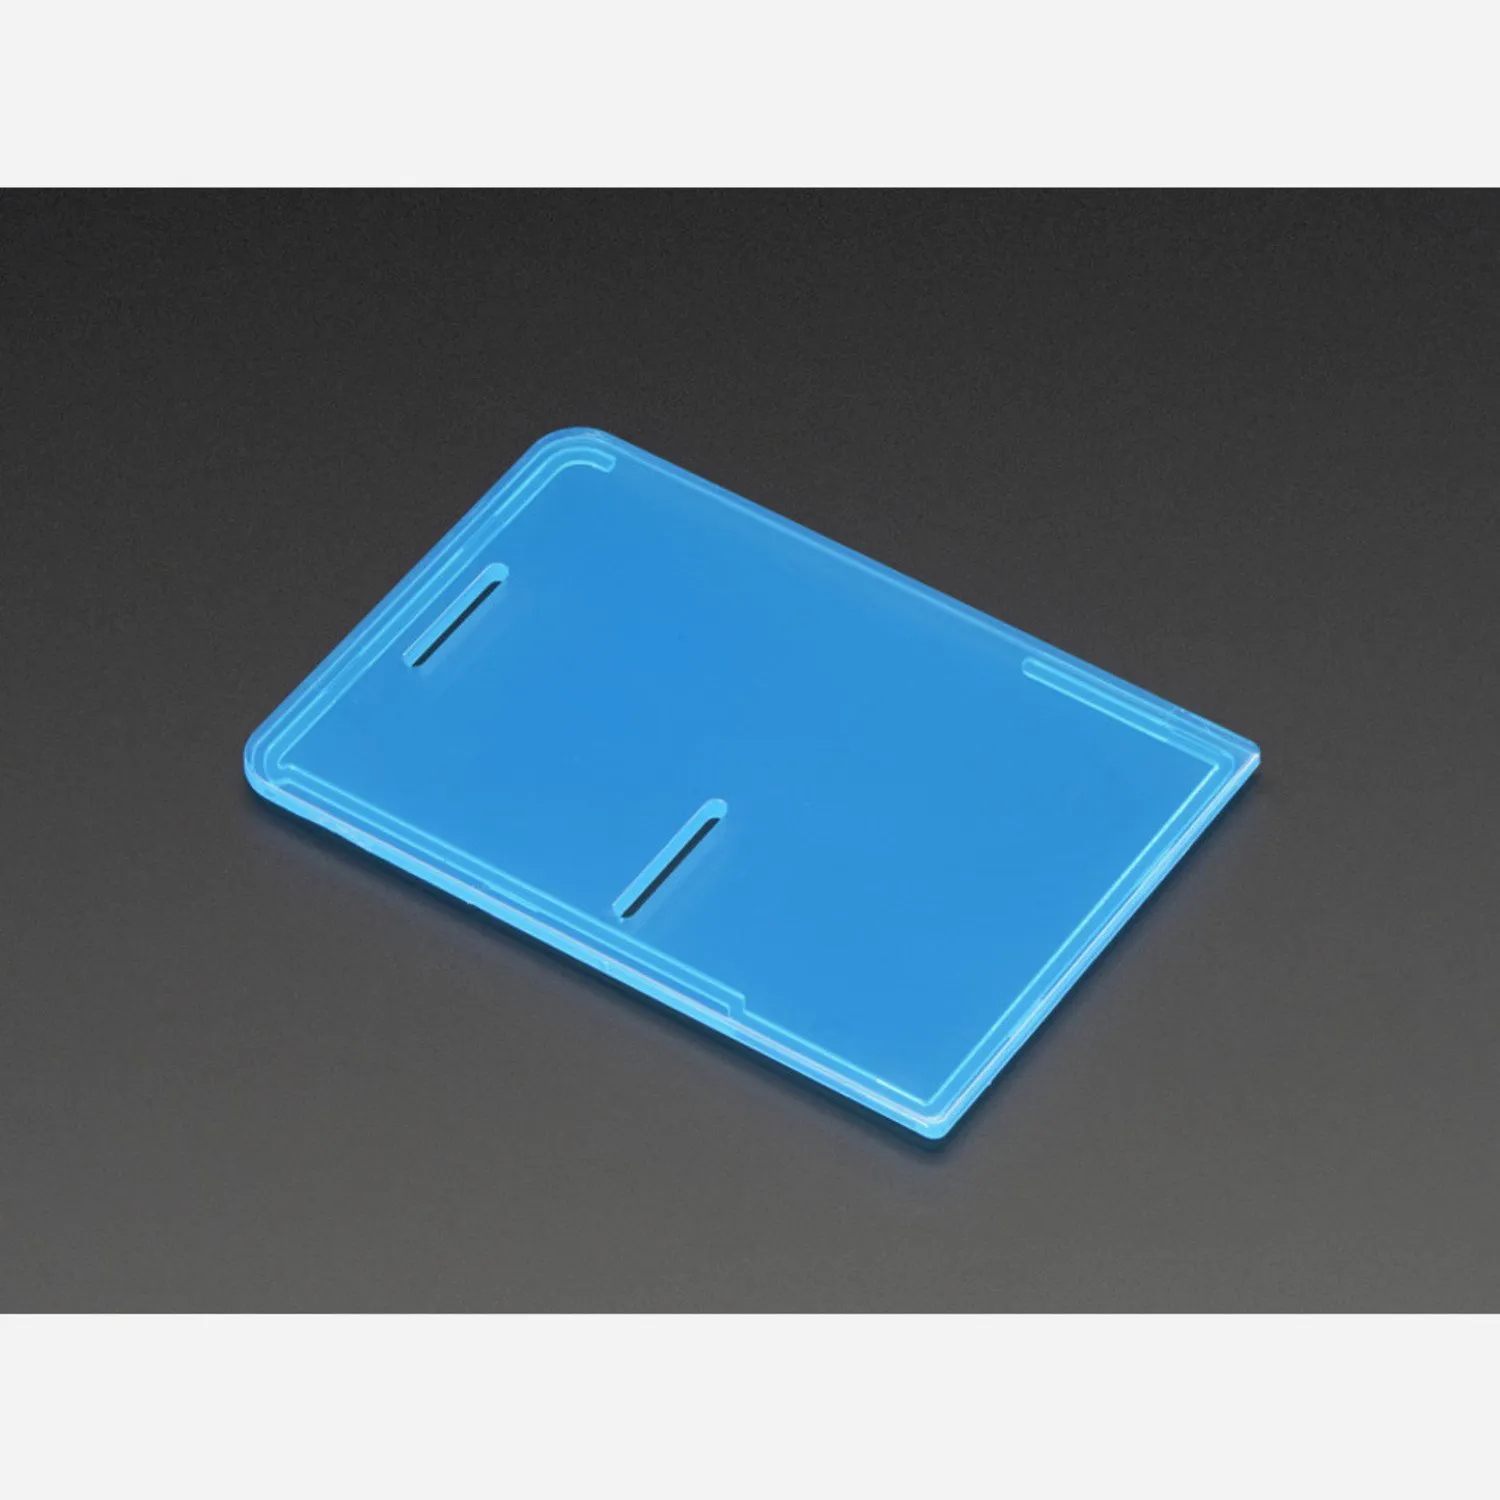 Photo of Raspberry Pi Model B+ / Pi 2 / Pi 3 Case Lid - Blue